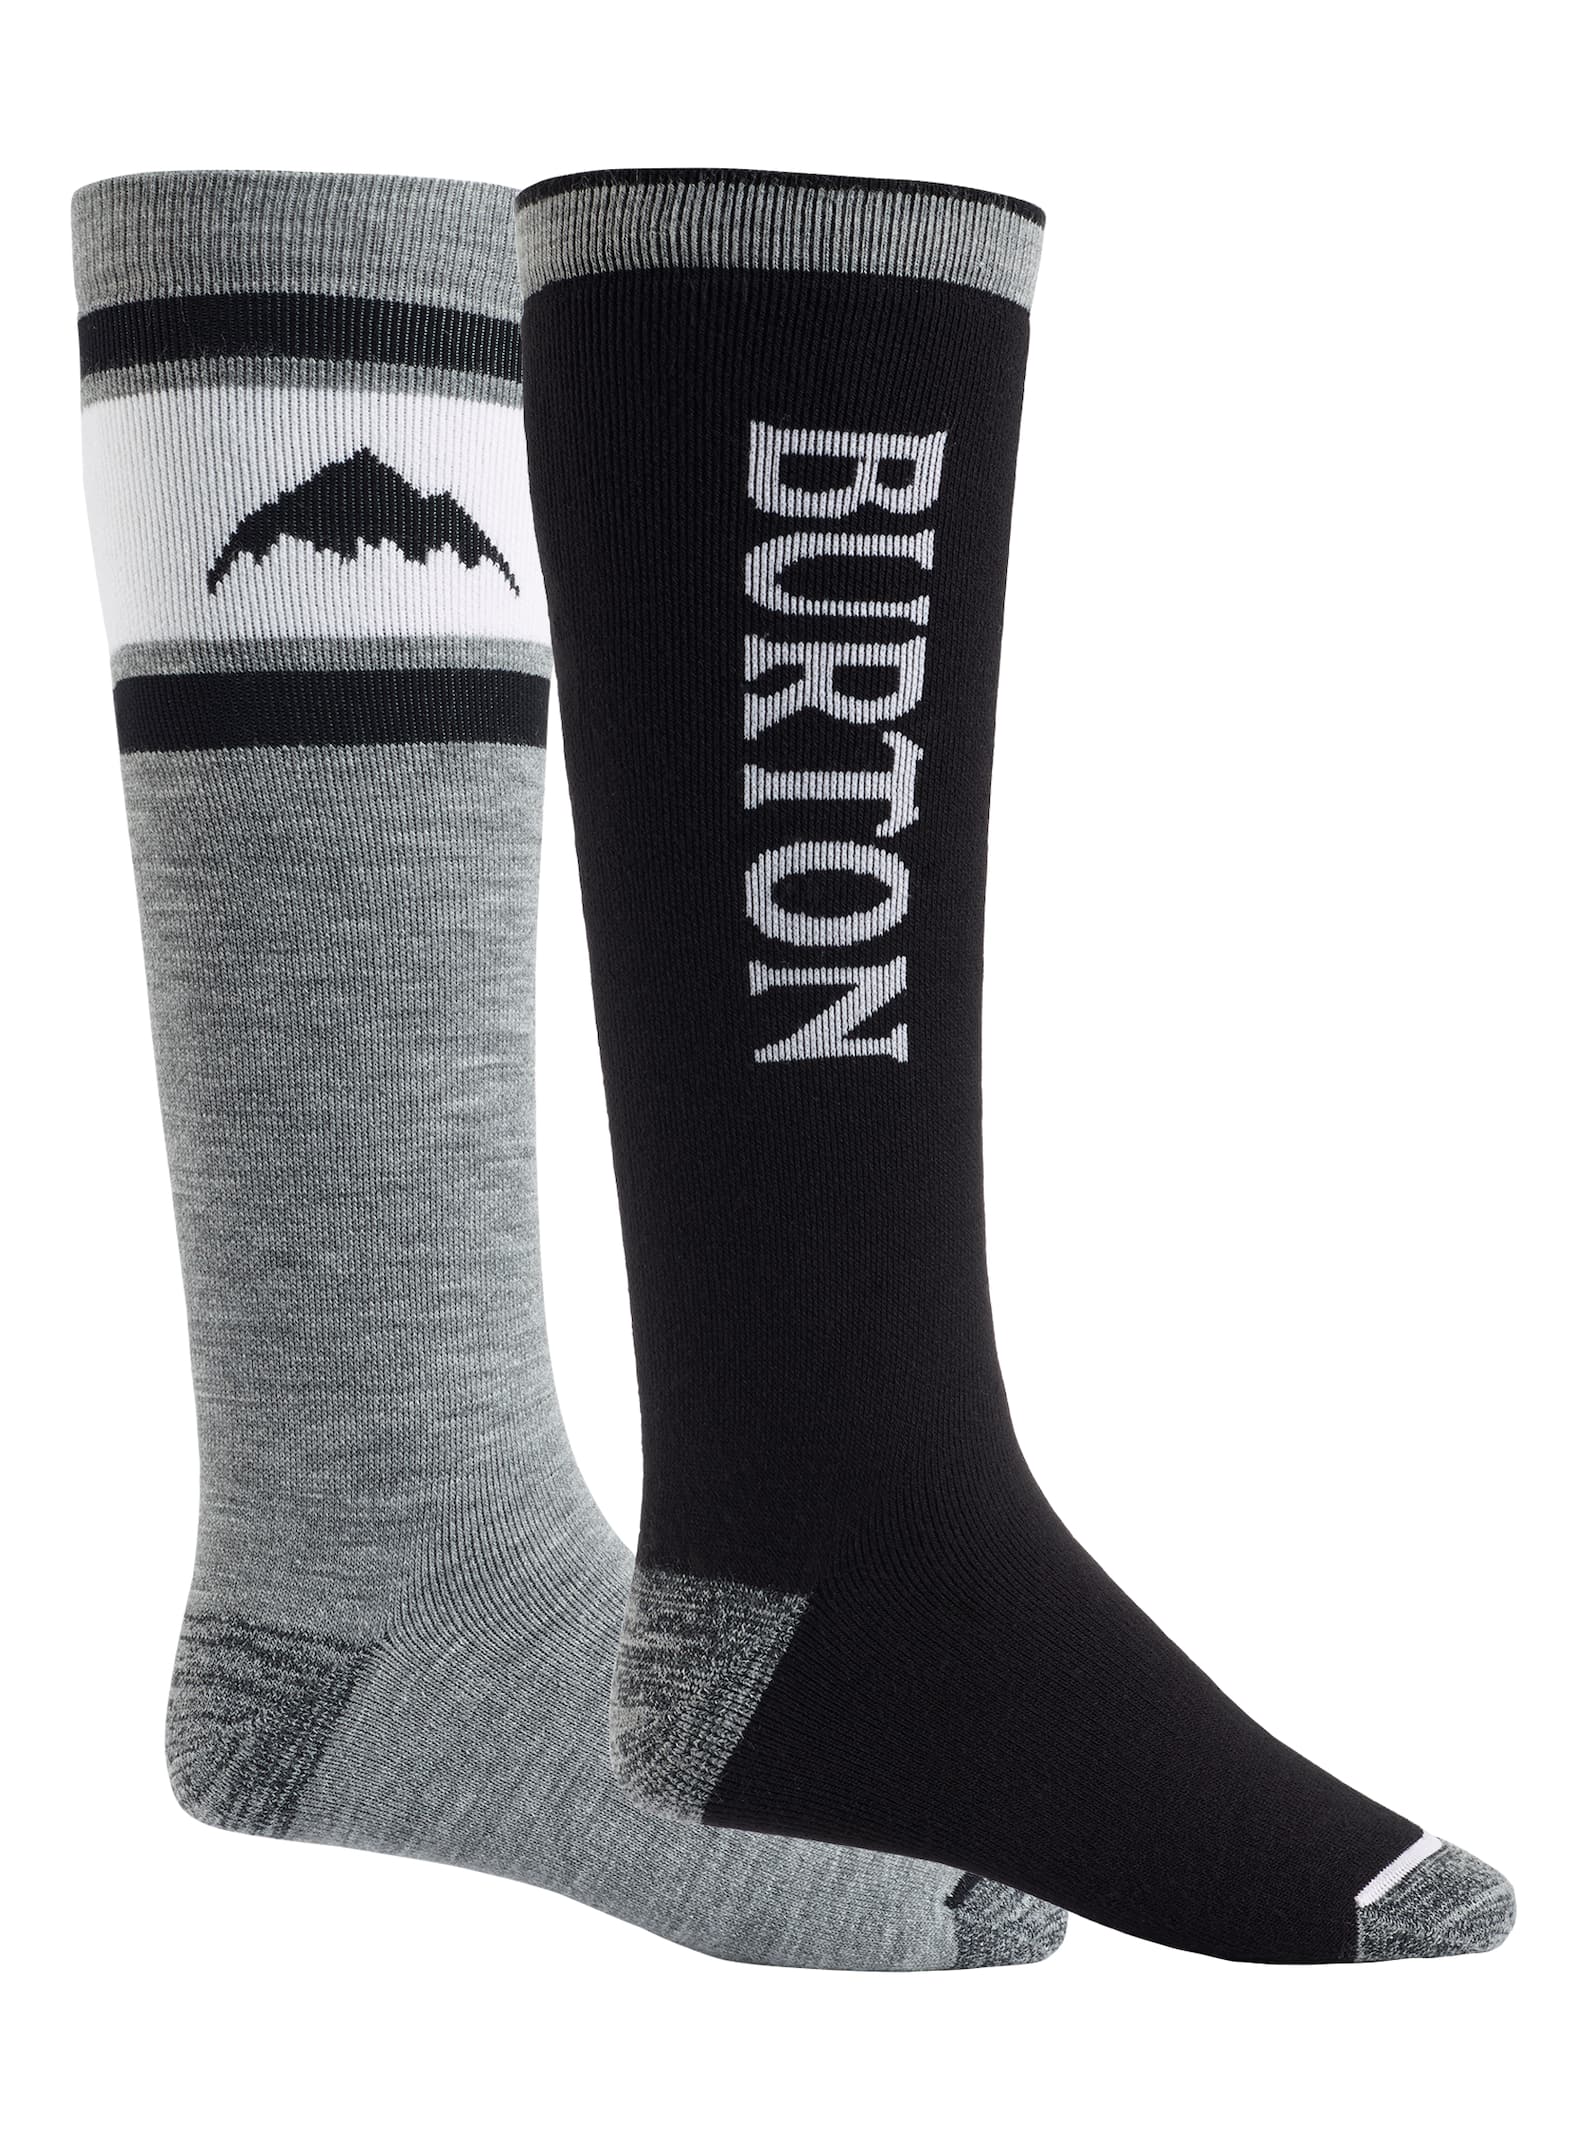 Men's Socks | Burton Snowboards AU